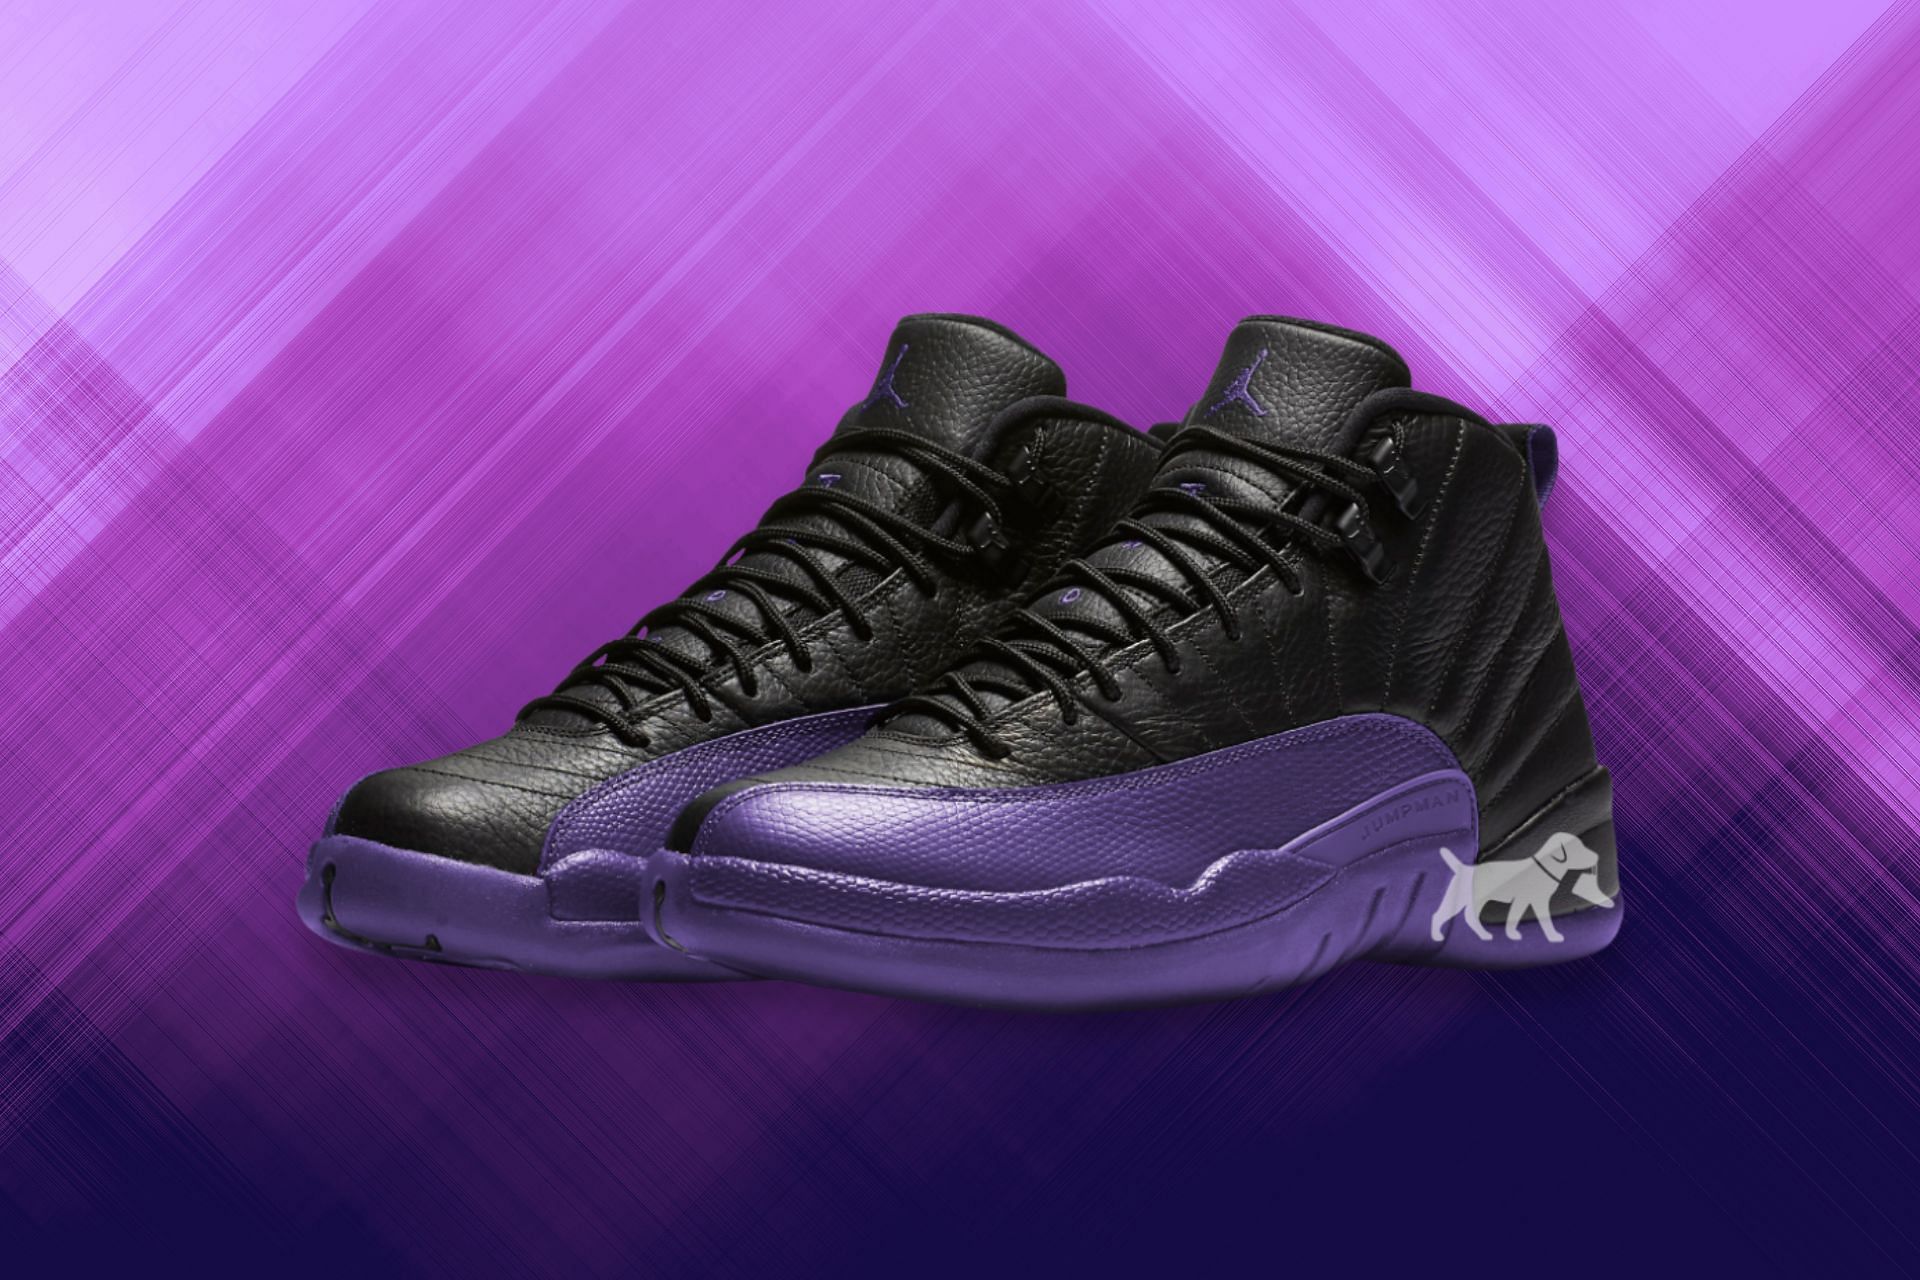 Where to buy Air Jordan 12 Retro “Field Purple” shoes? Price, release